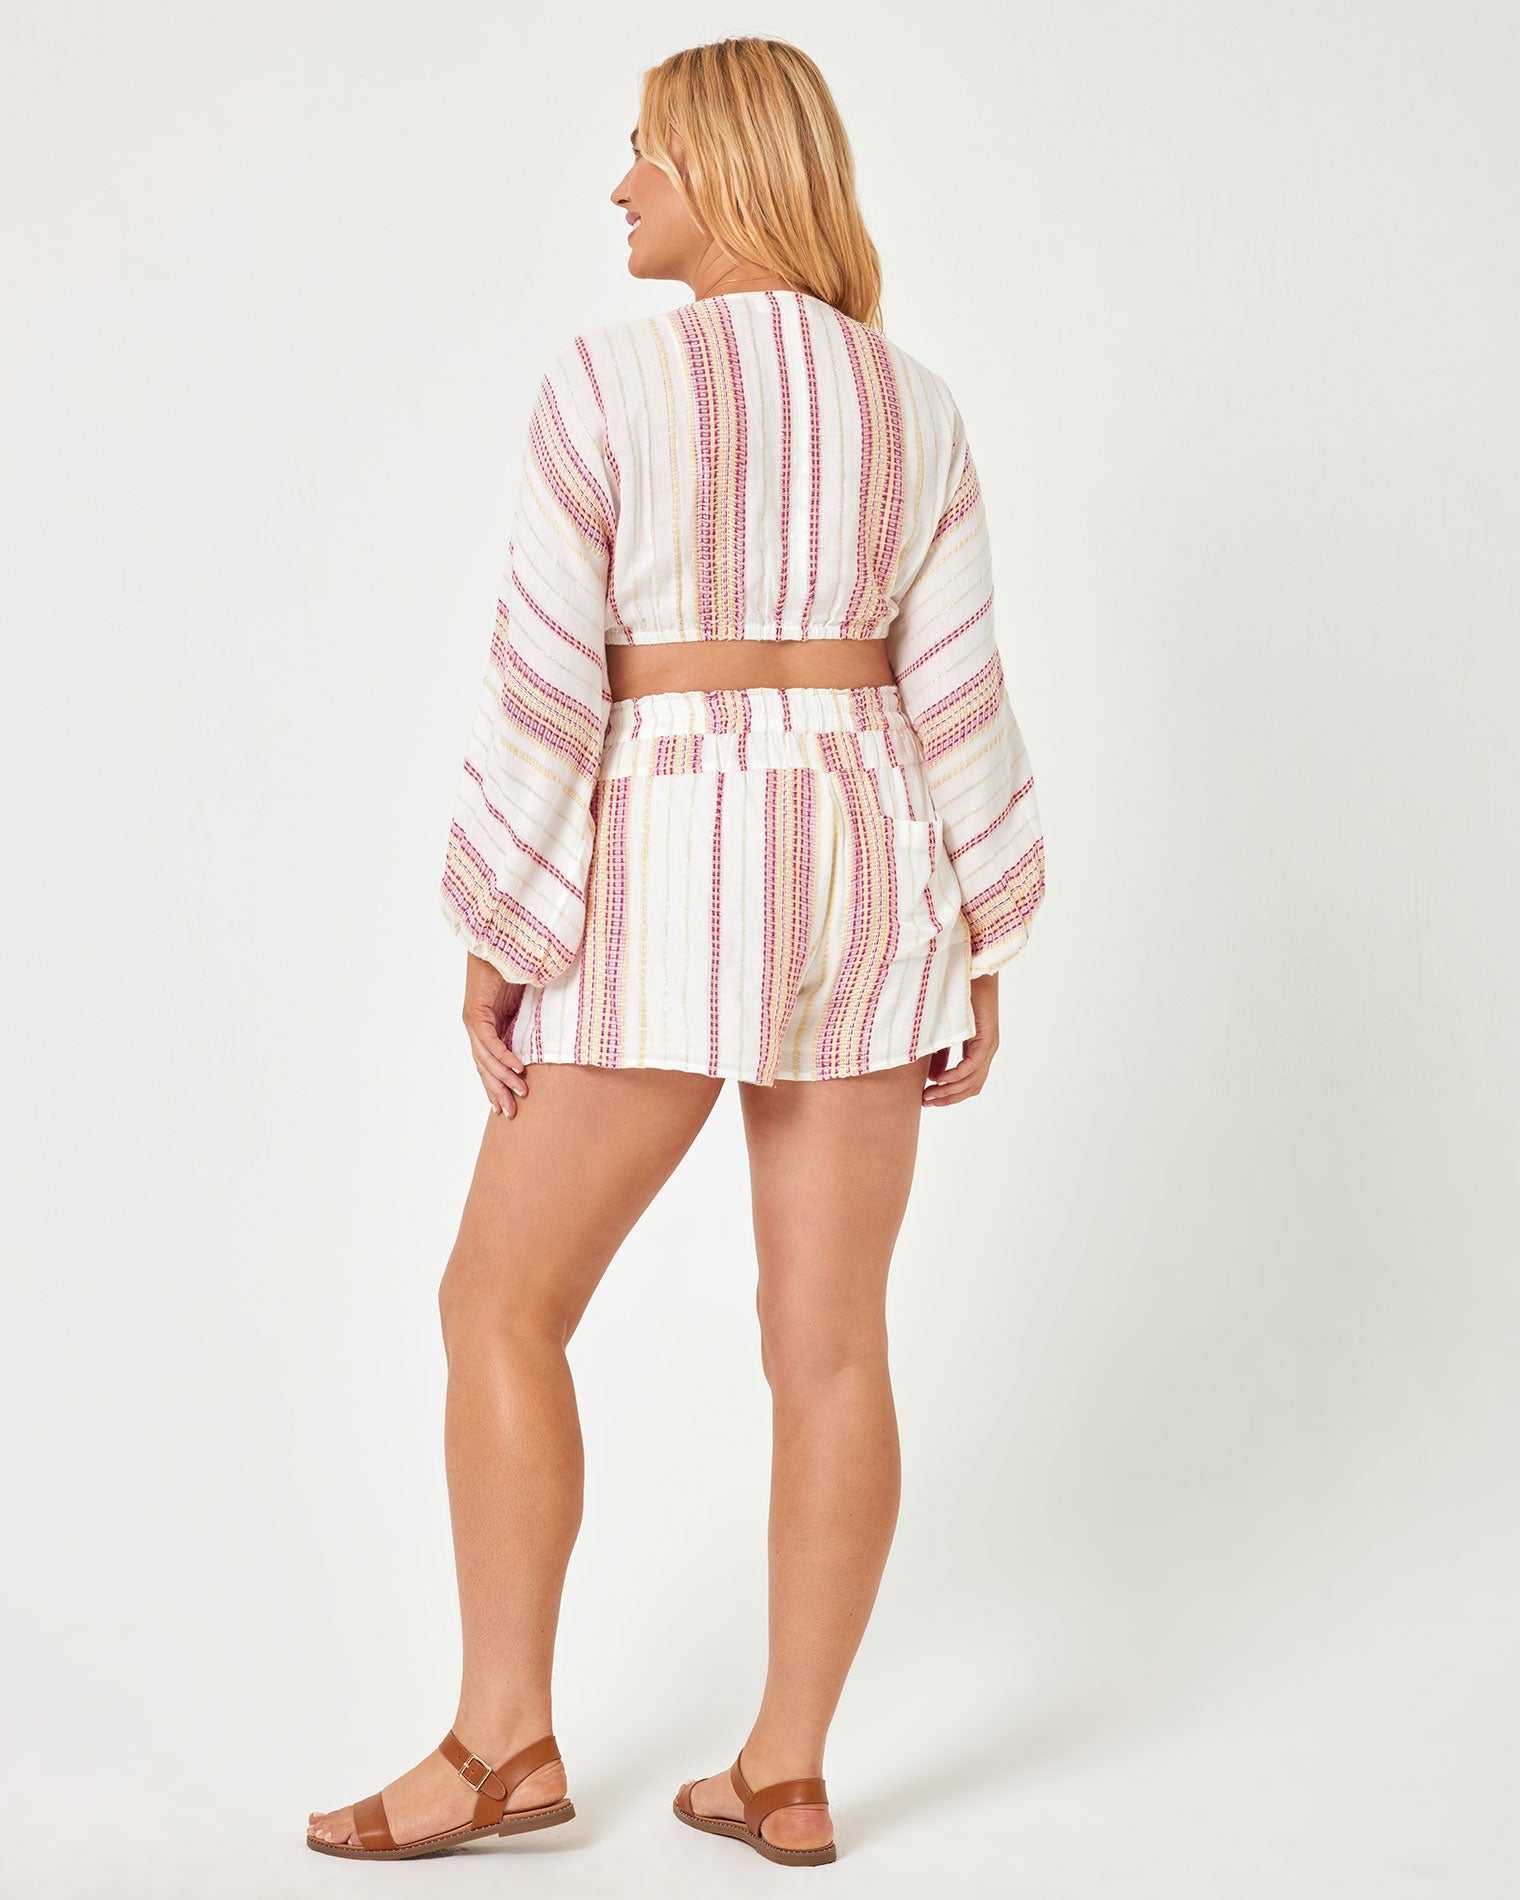 Reese Short Siesta Stripe | Model: Sydney (size: XL)